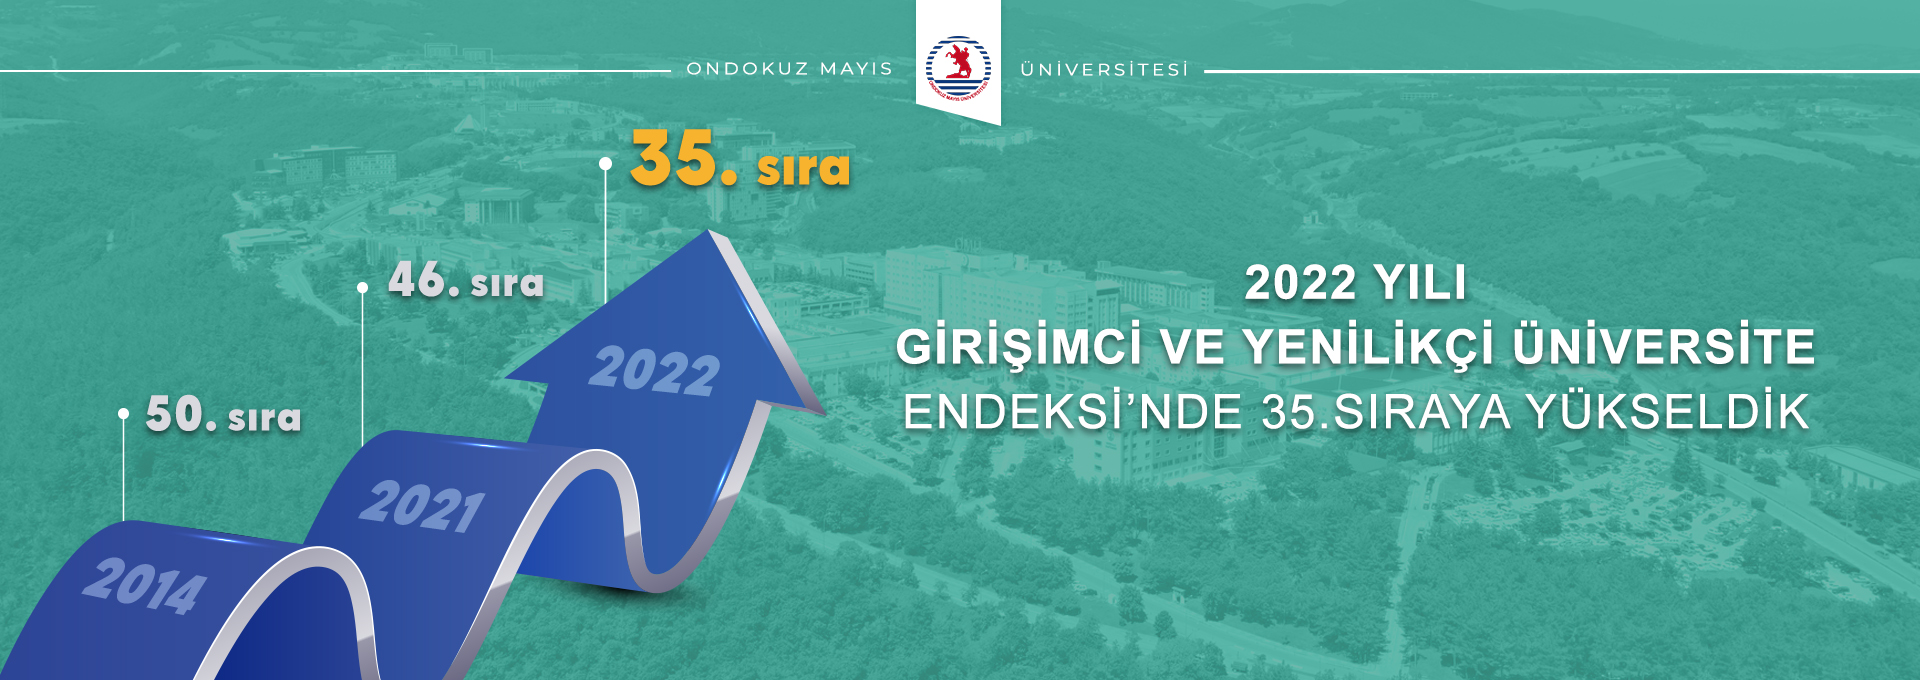 OMU Rises 11 Ranks in TÜBİTAK Entrepreneurial and Innovative University Index, Ranking Among Türkiye's Top 35 Universities